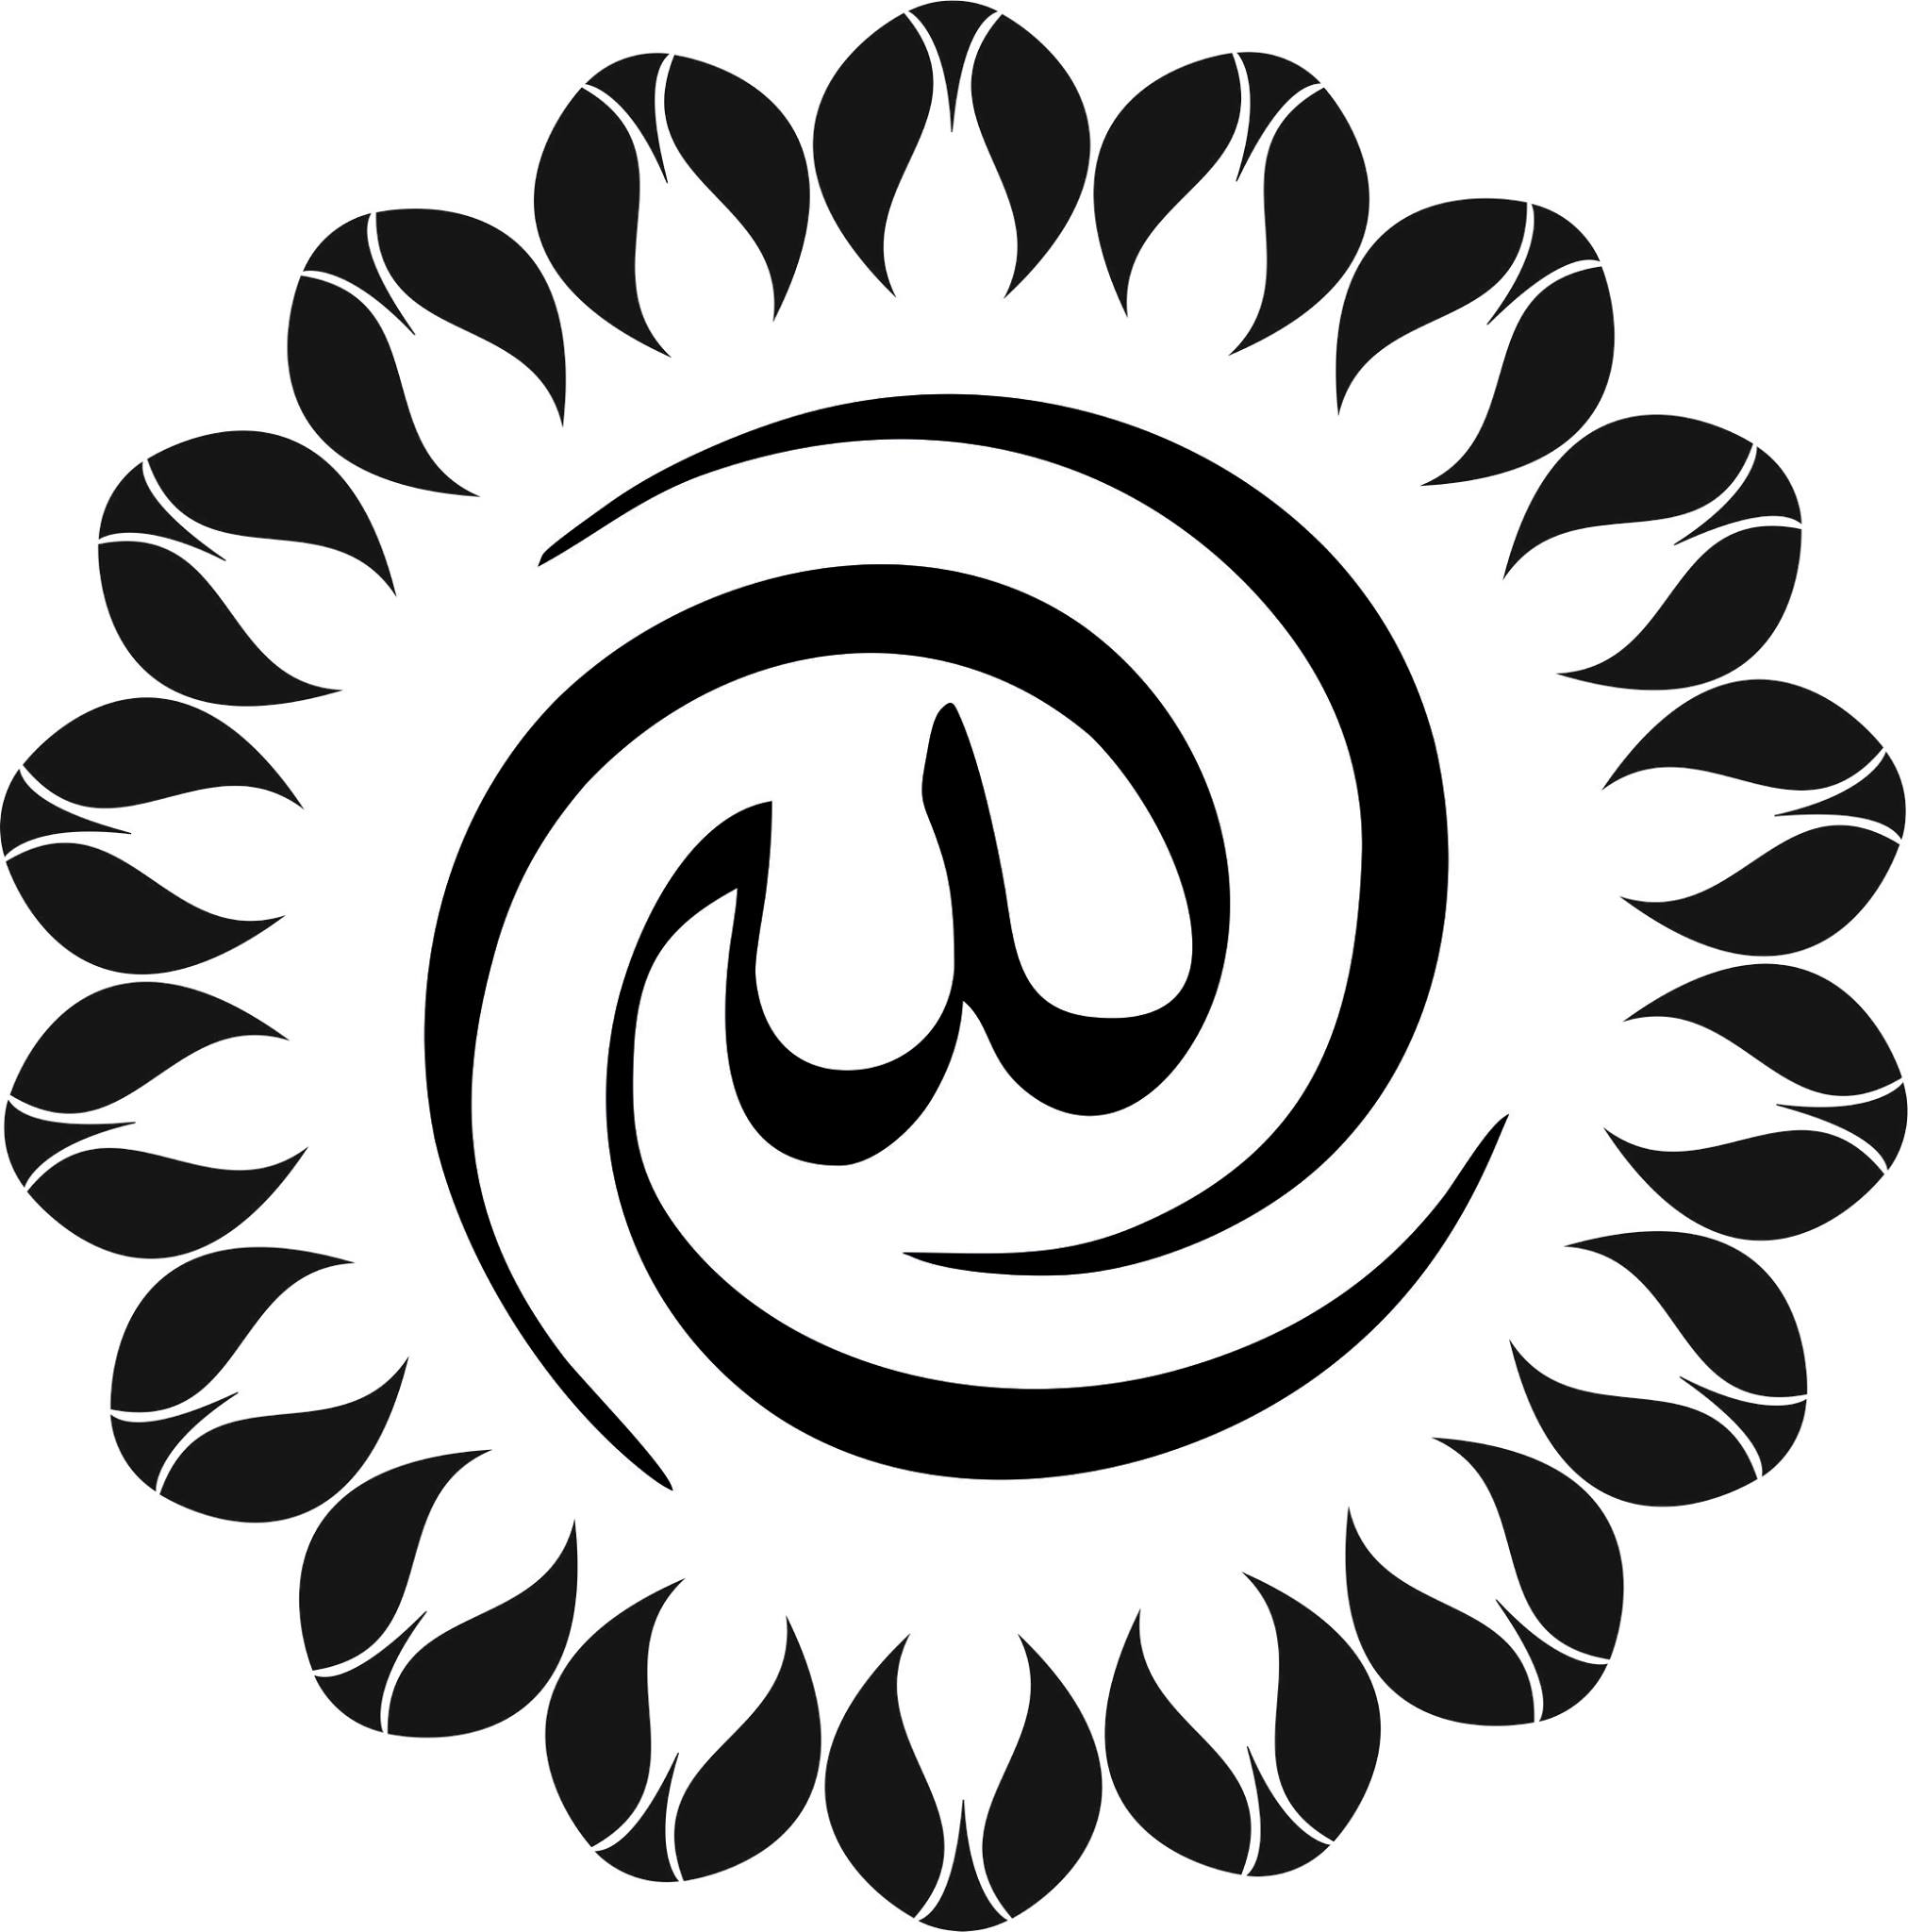 Allah en calligraphie arabe Vector Art jpg Image